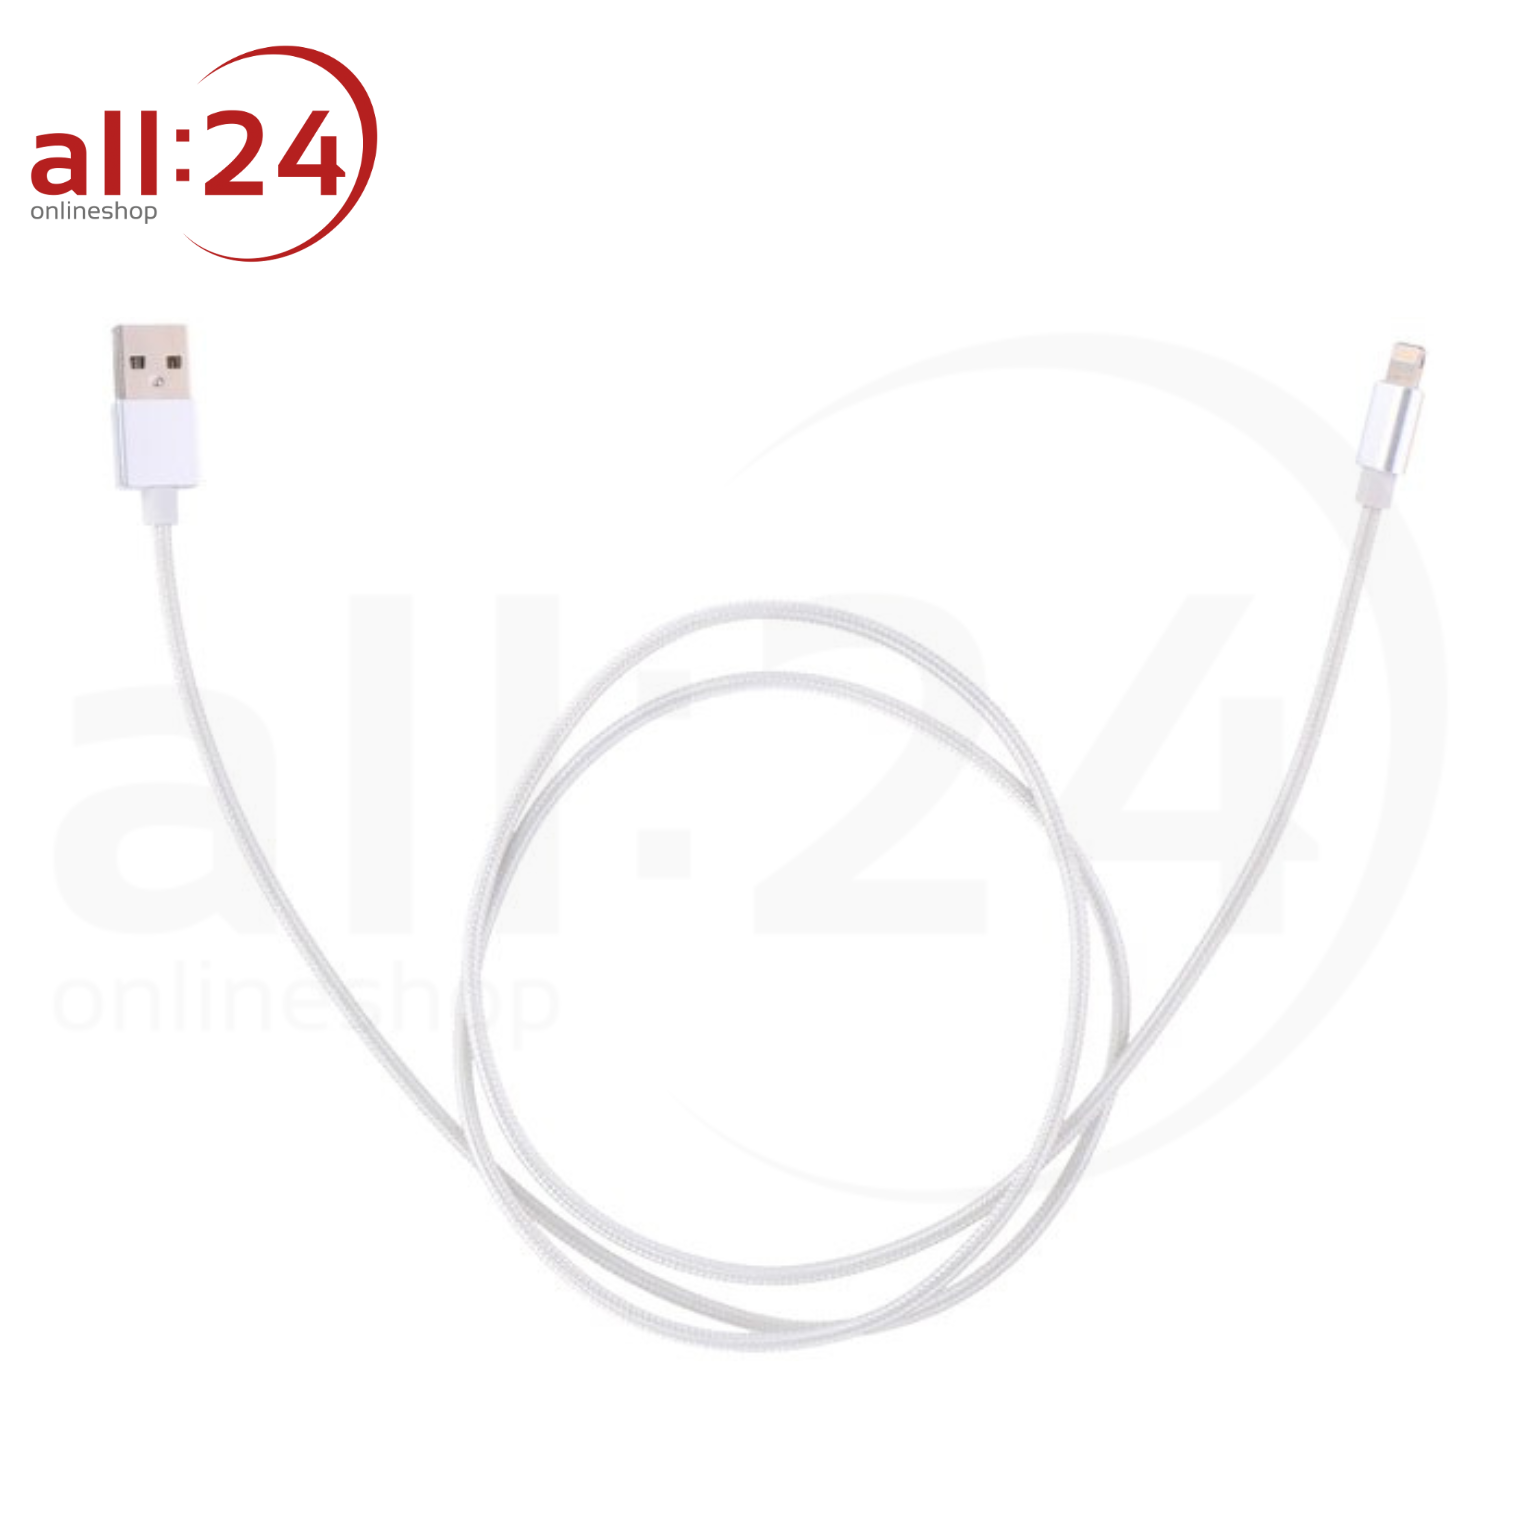 ALLride Lade- und Sync-Kabel iPhone/iPad (Lightning) 1,2m 